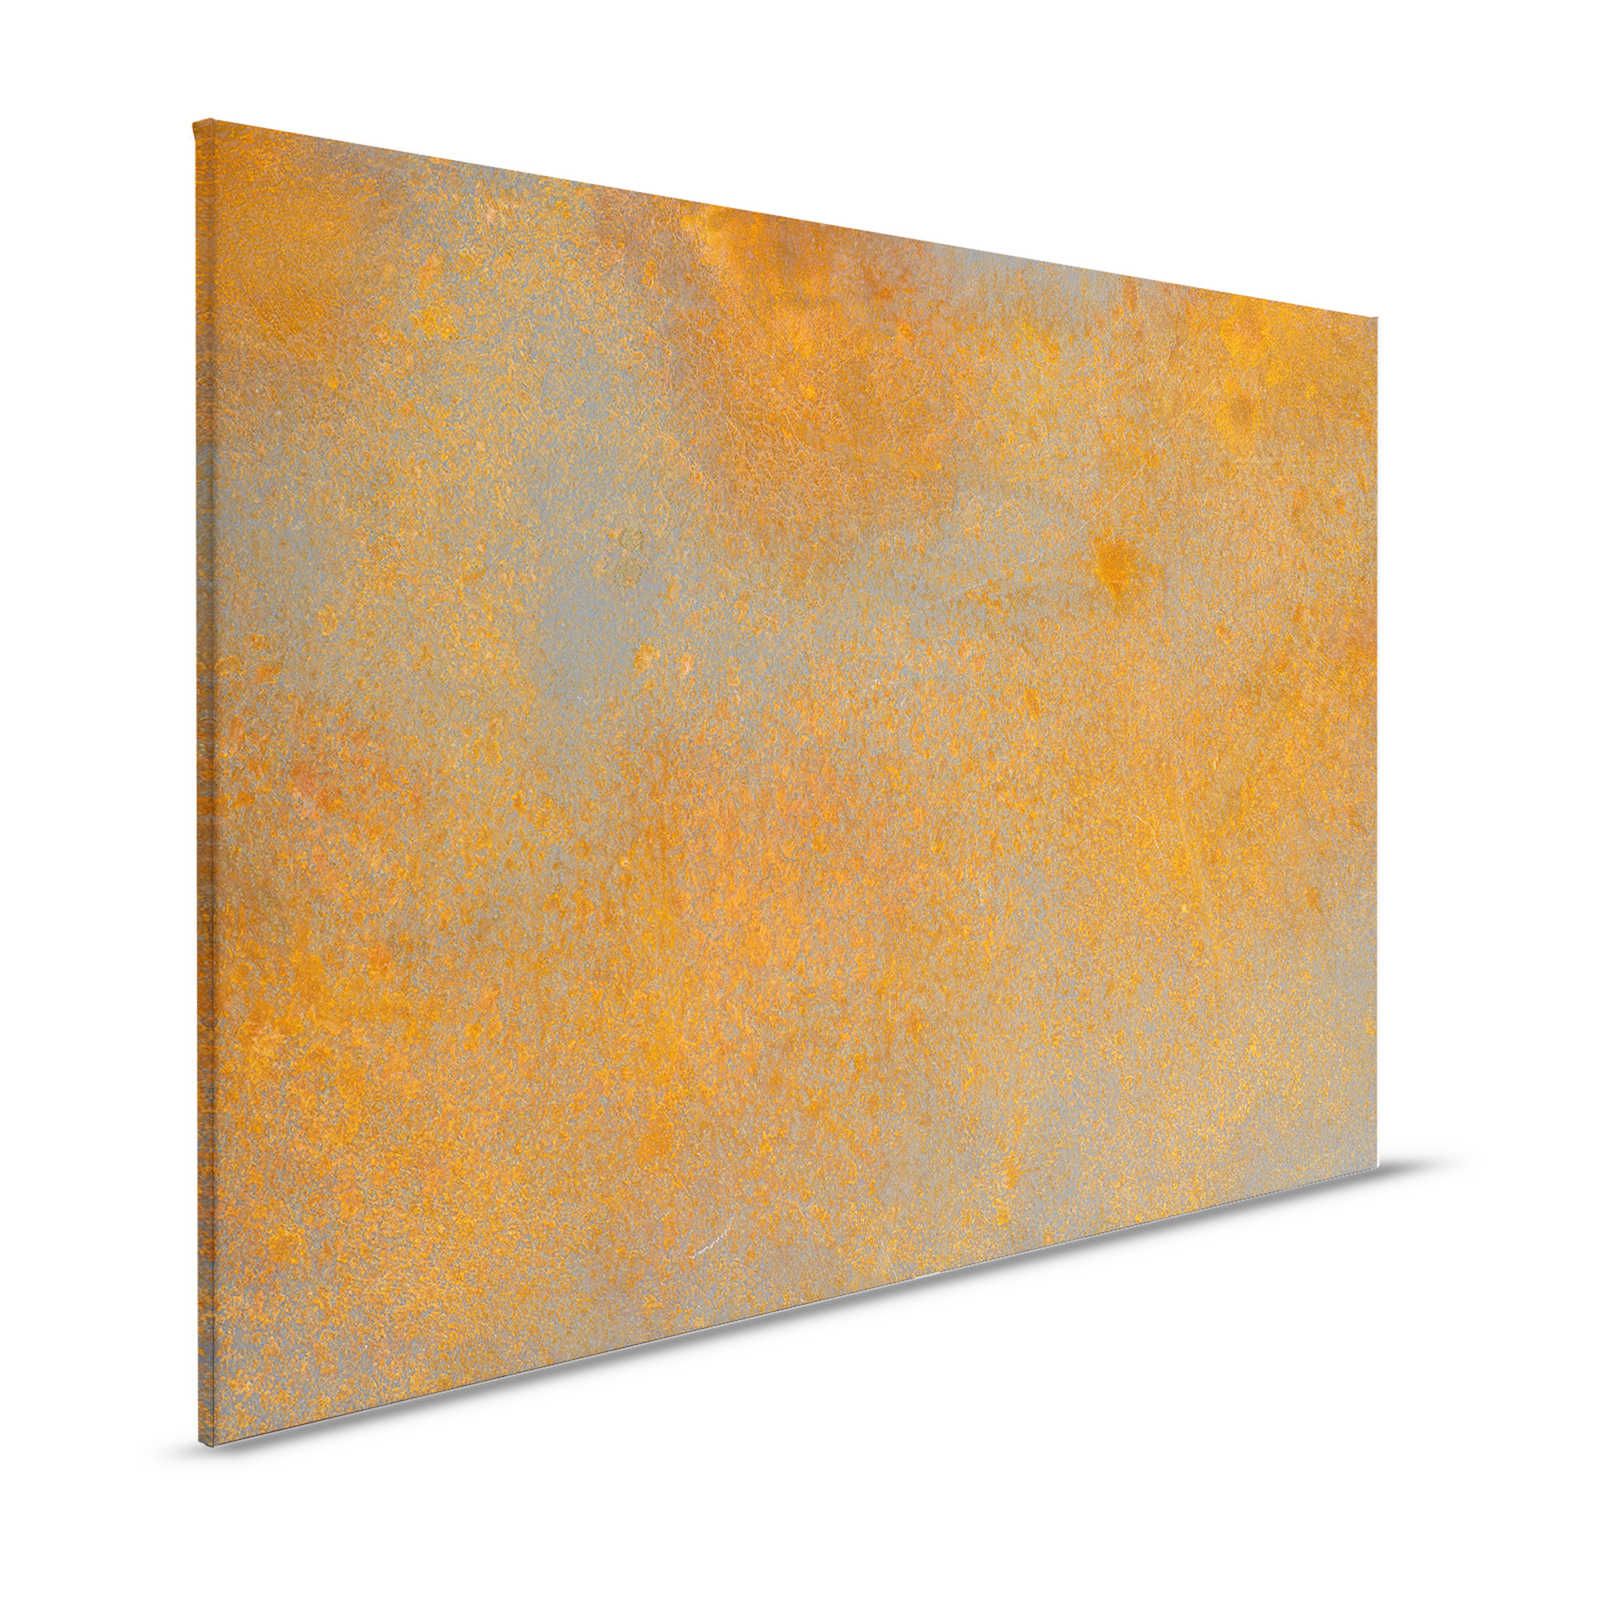 Rostoptik Leinwandbild Orange Braun mit Used Look – 1,20 m x 0,80 m
